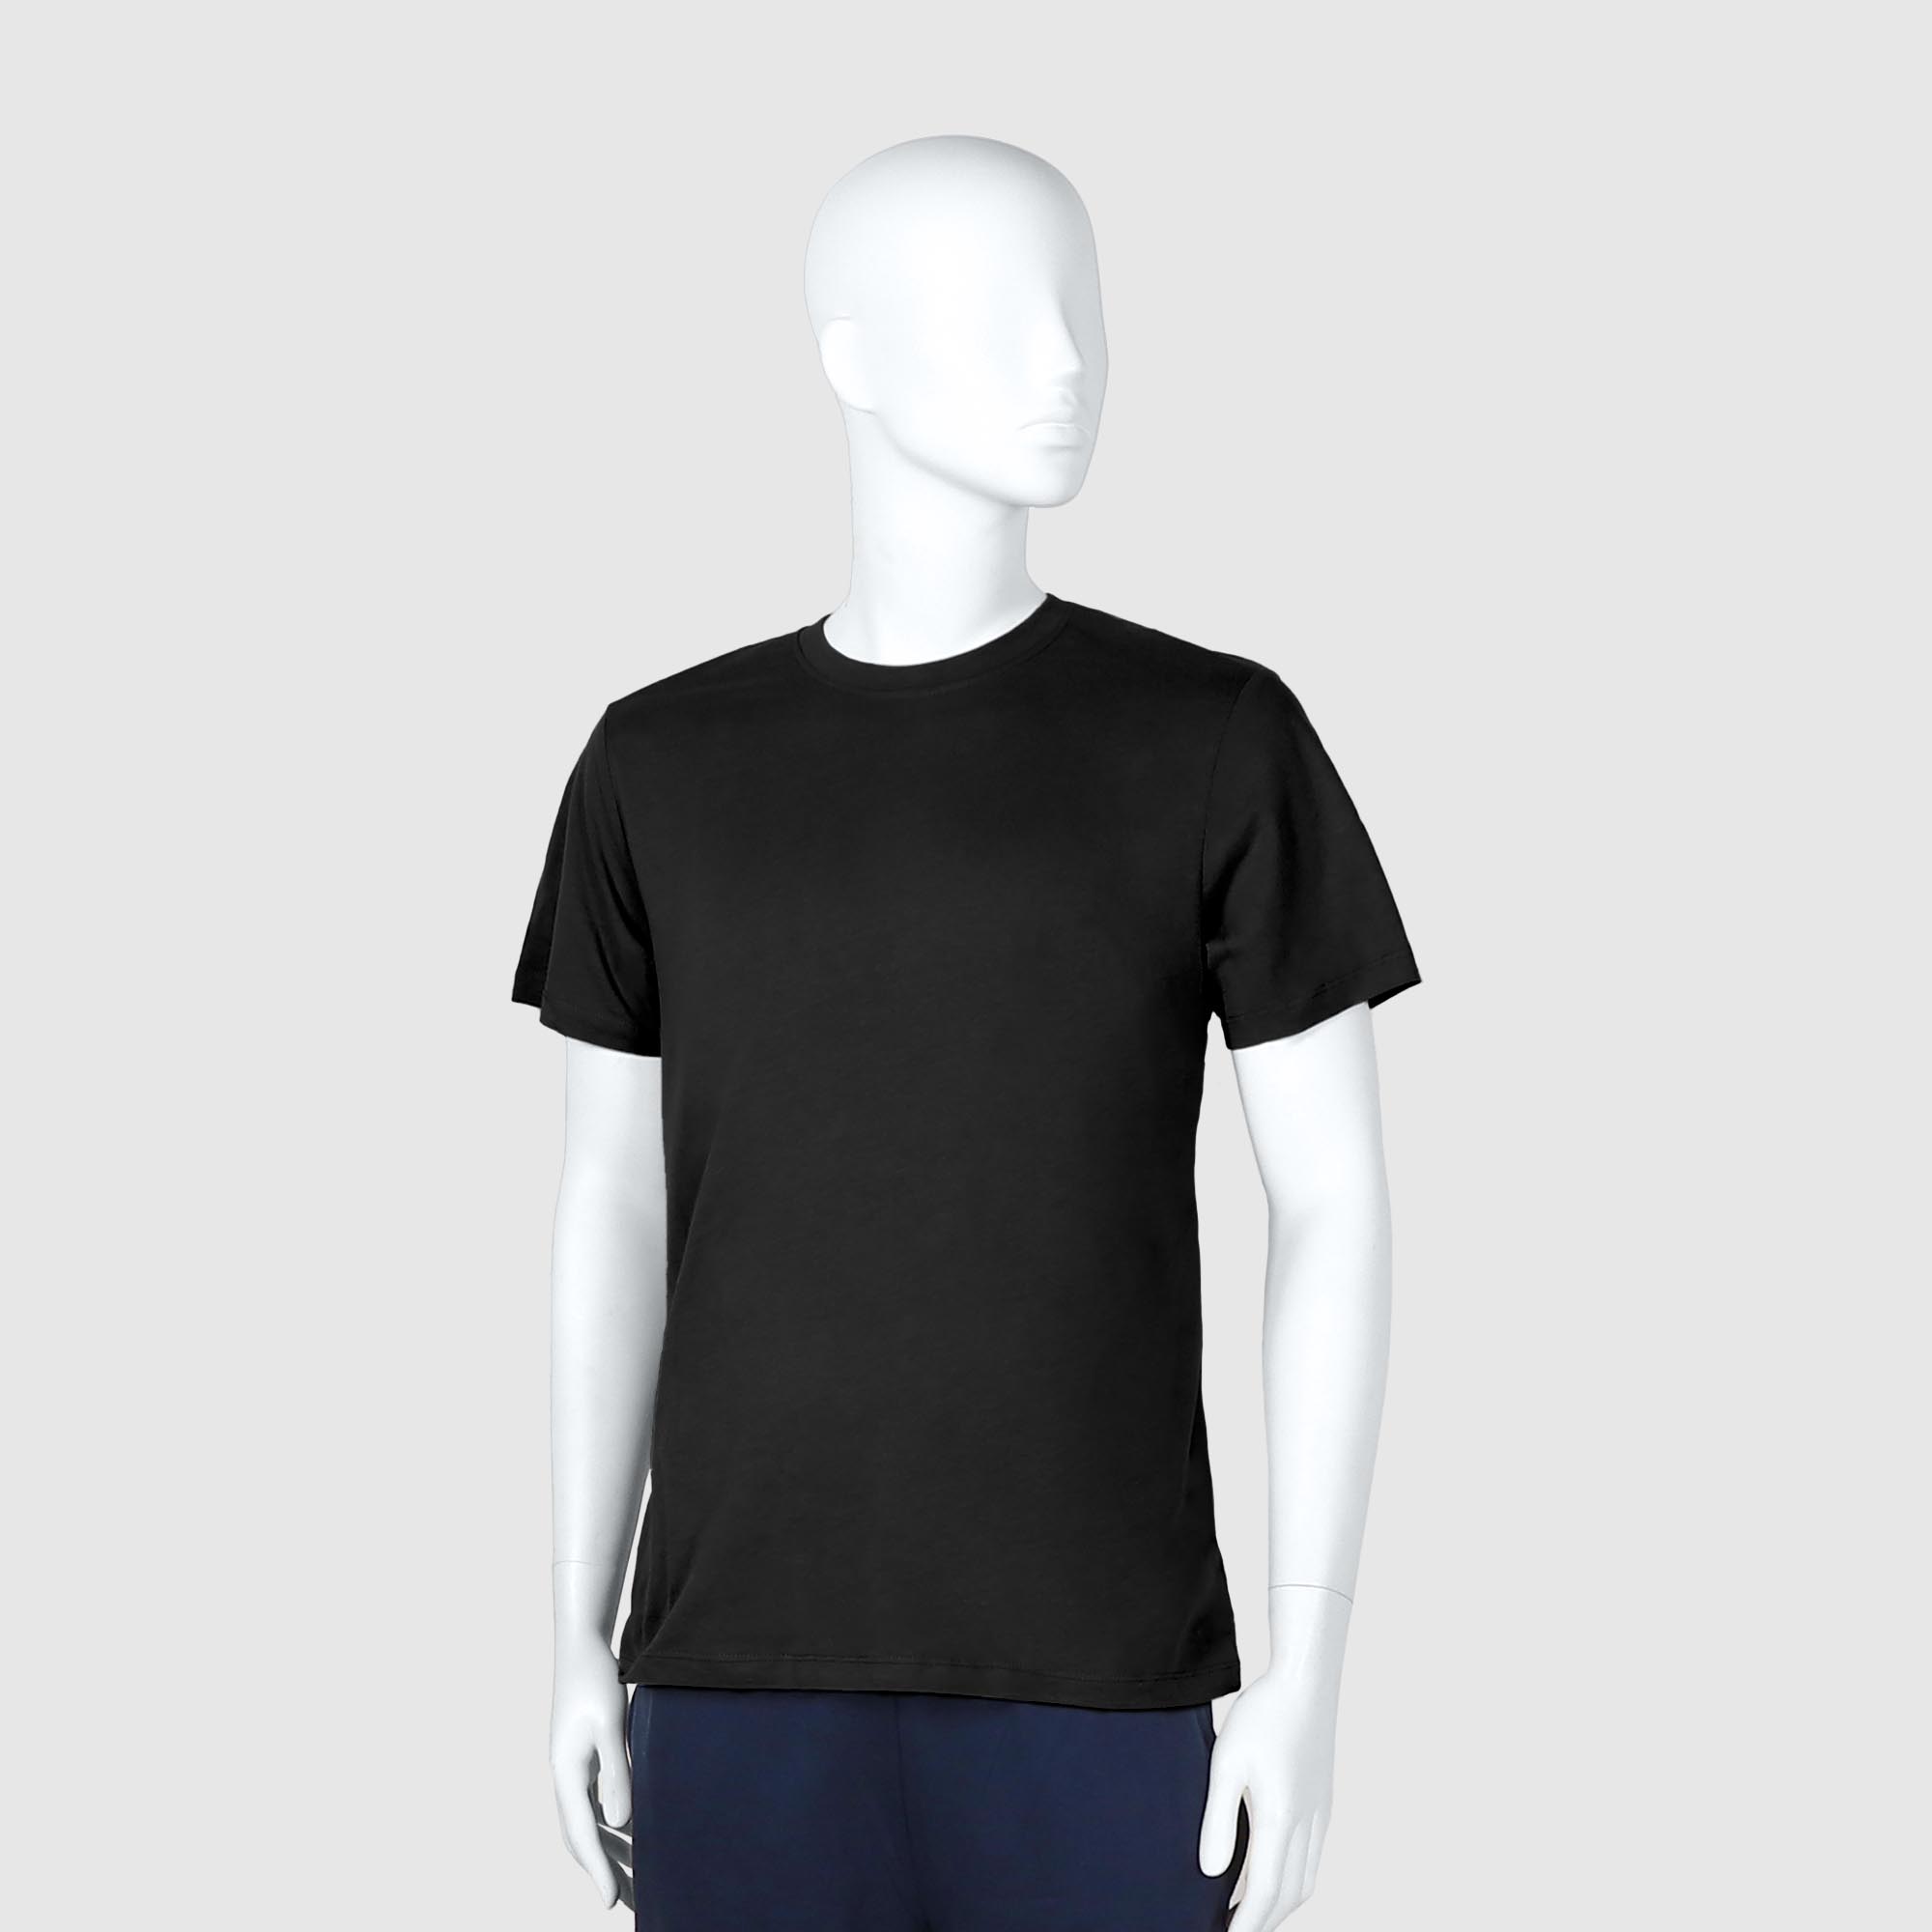 Мужская футболка Diva Teks чёрная (DTD-01), цвет чёрный, размер 48-50